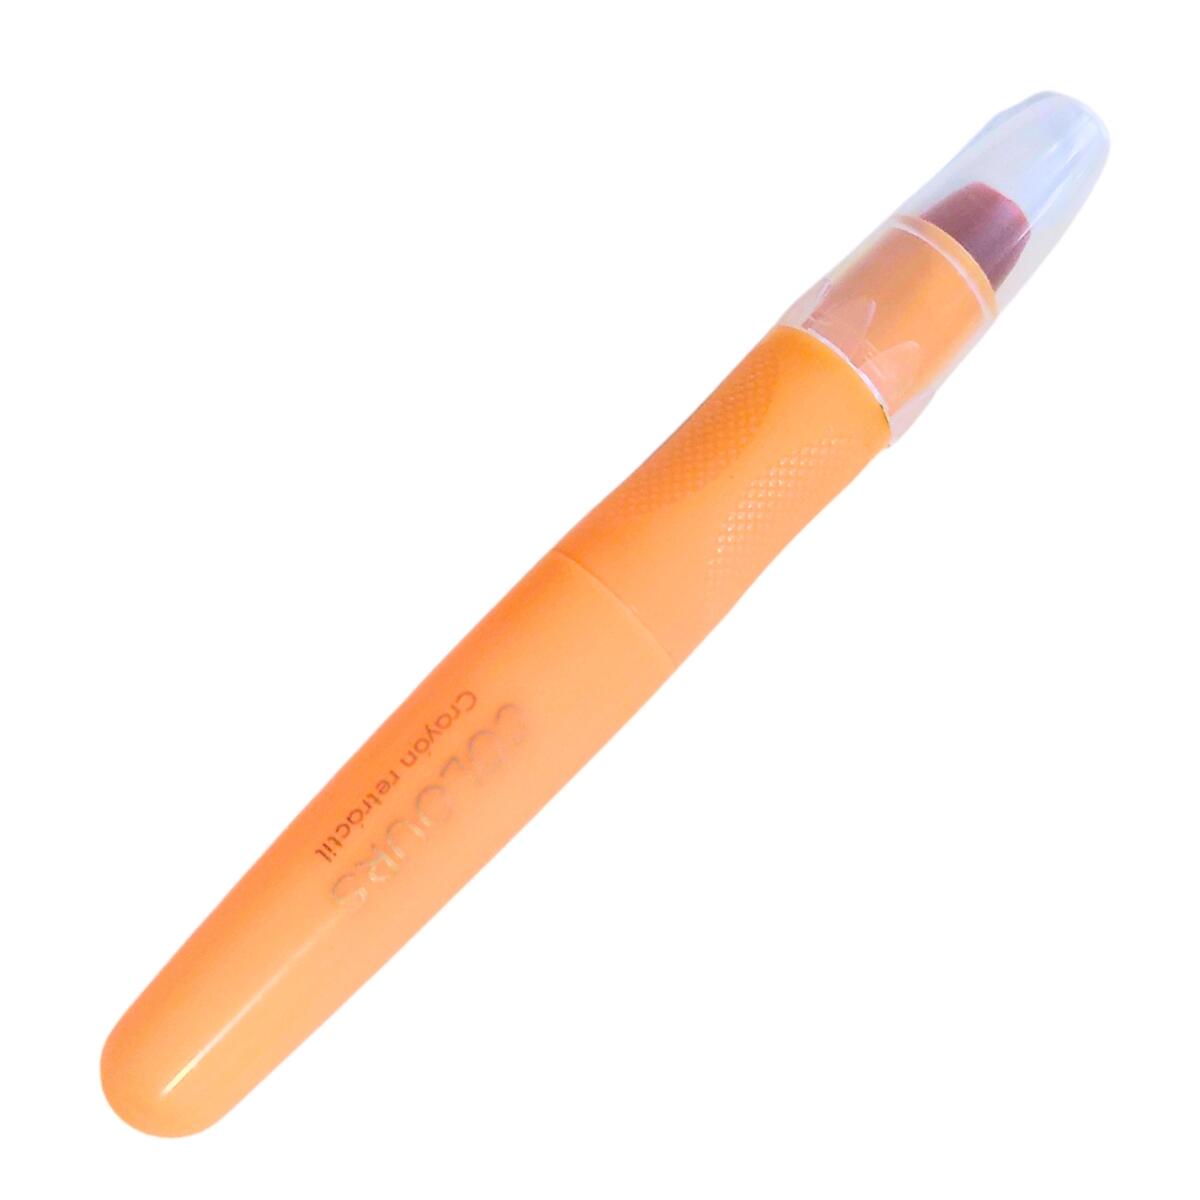 Crayon neon retractil gel c/aroma x 6